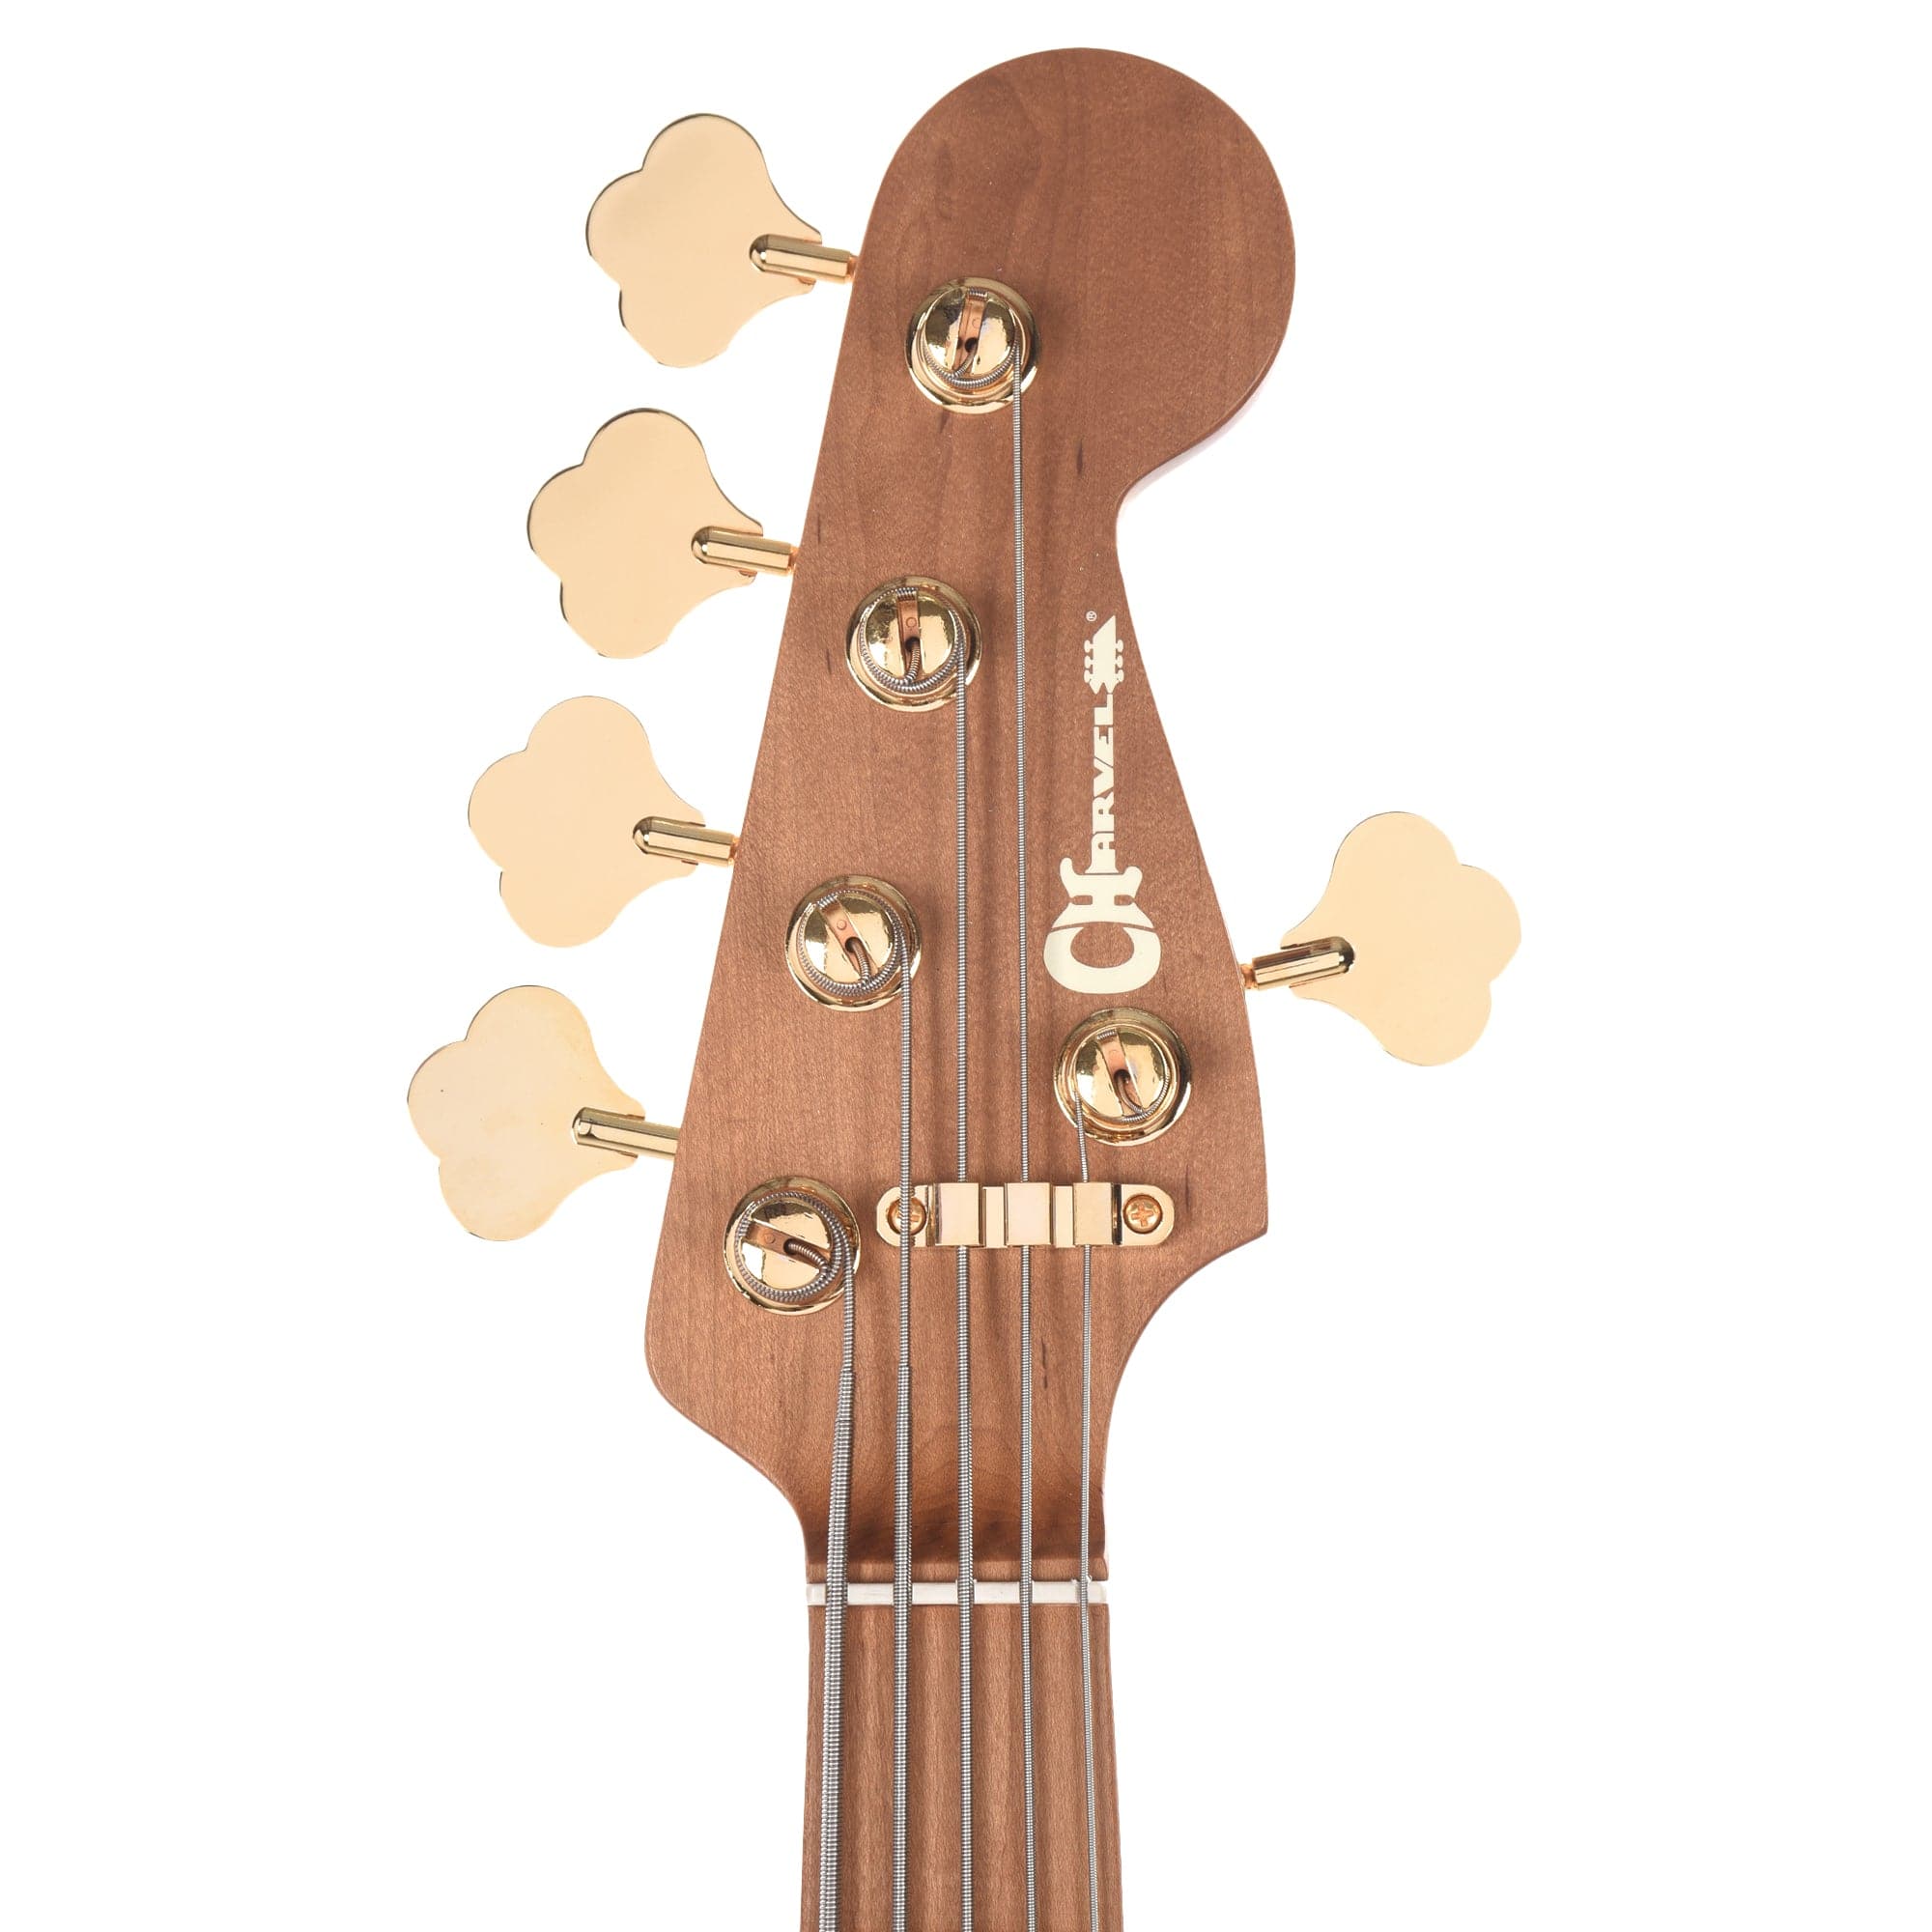 Charvel Pro-Mod San Dimas Bass JJ V Candy Apple Red Bass Guitars / 5-String or More